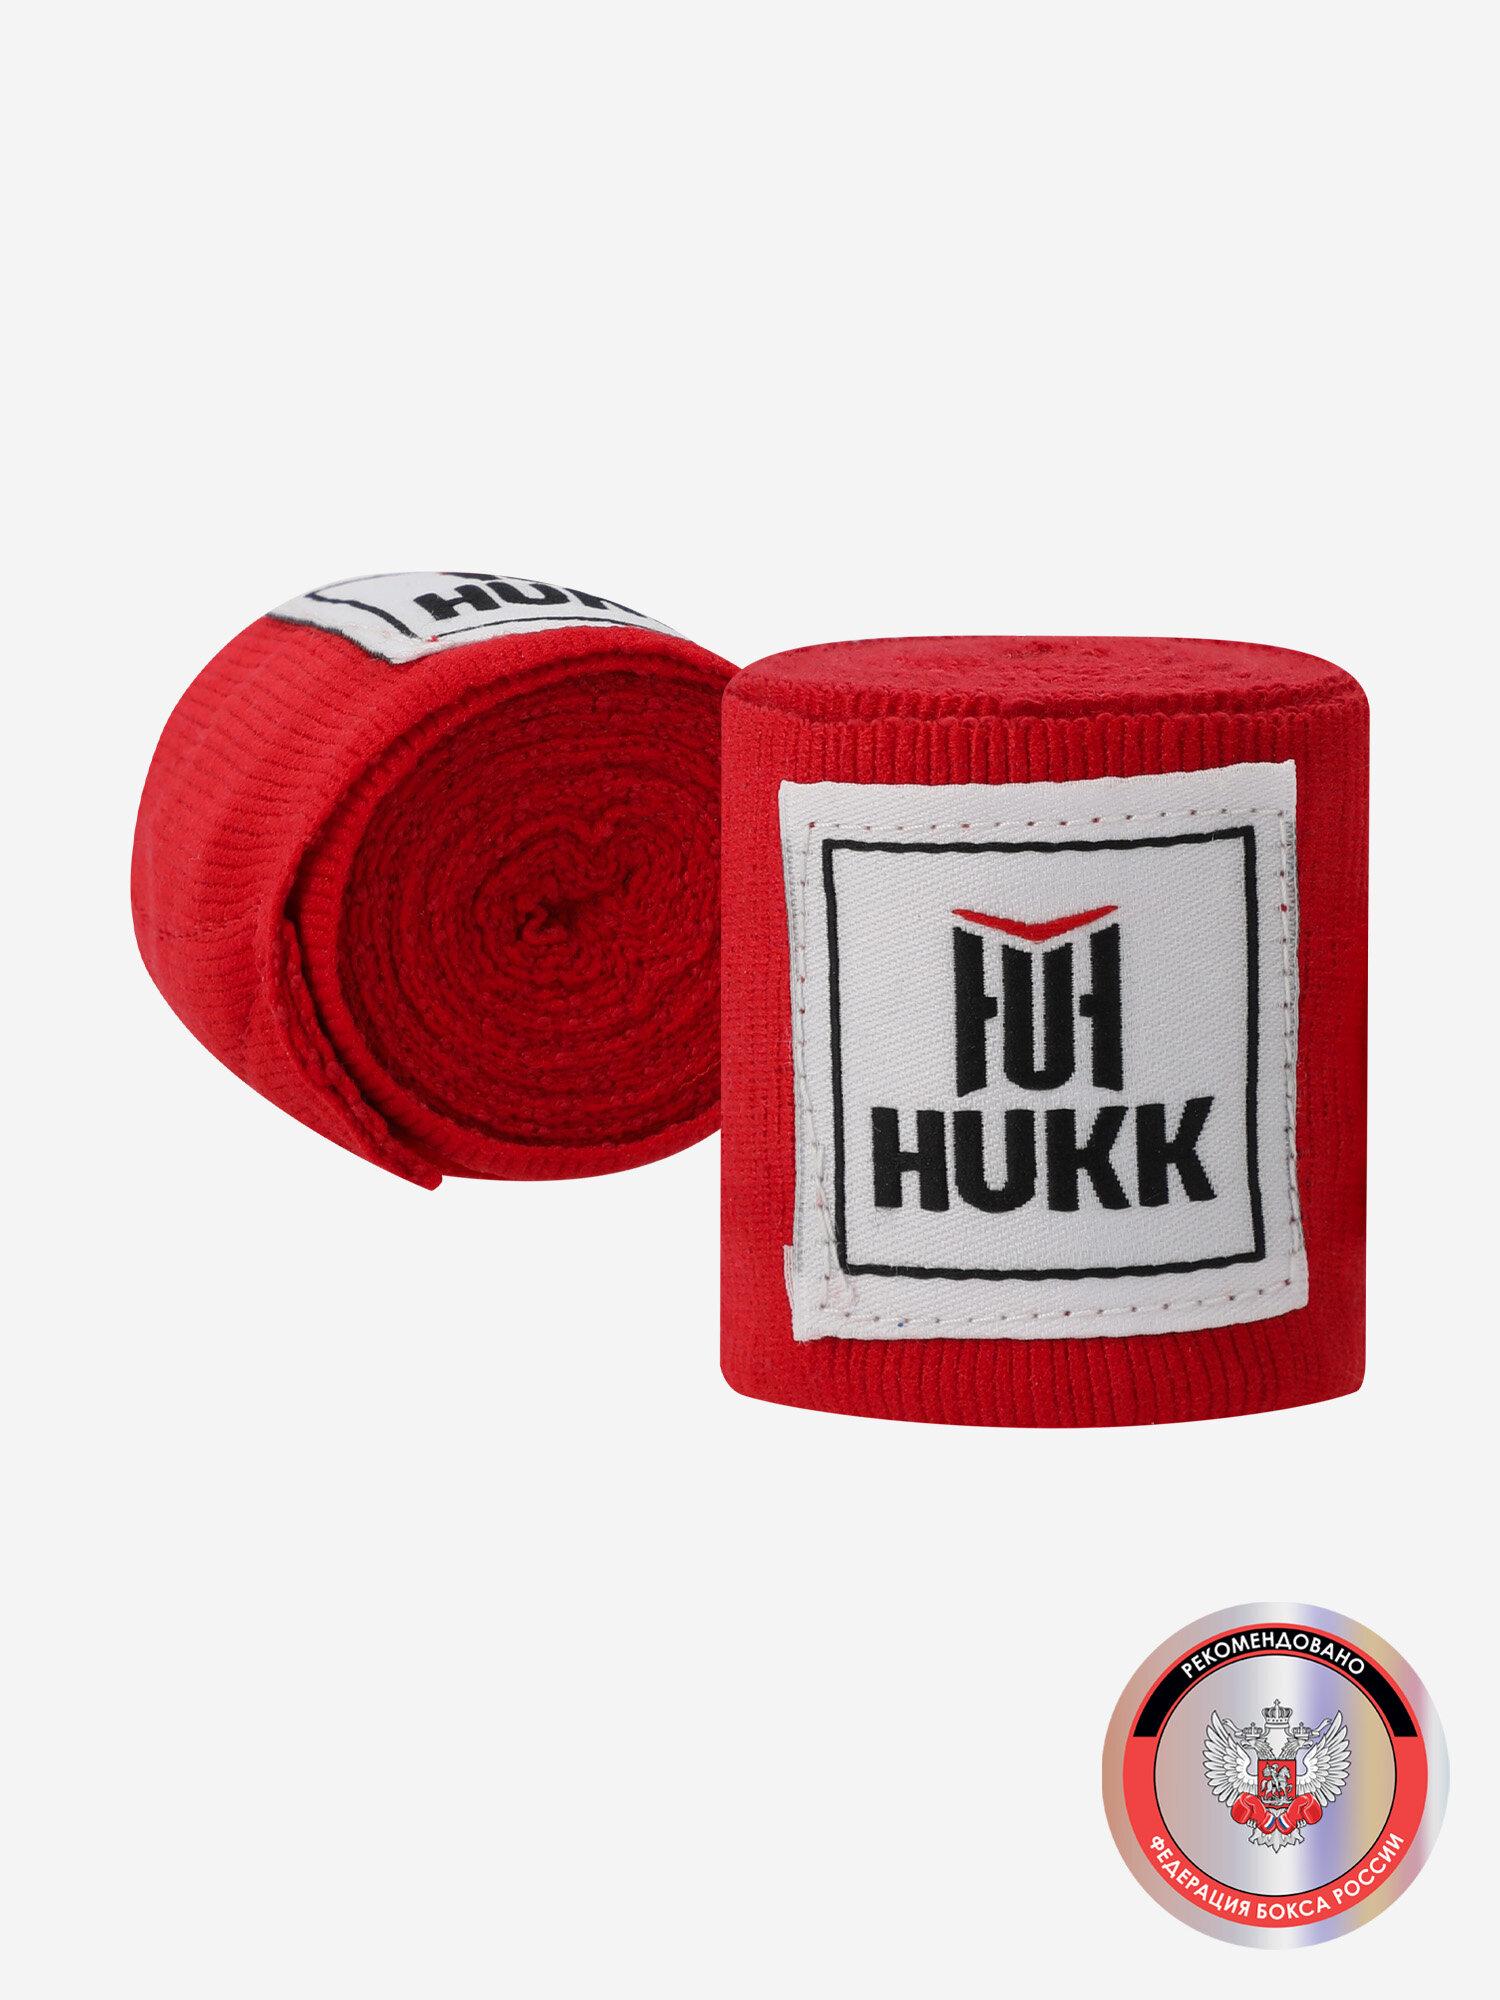 Бинты Hukk 2.5 м, 2 шт. Красный; RUS: Без размера, Ориг: one size